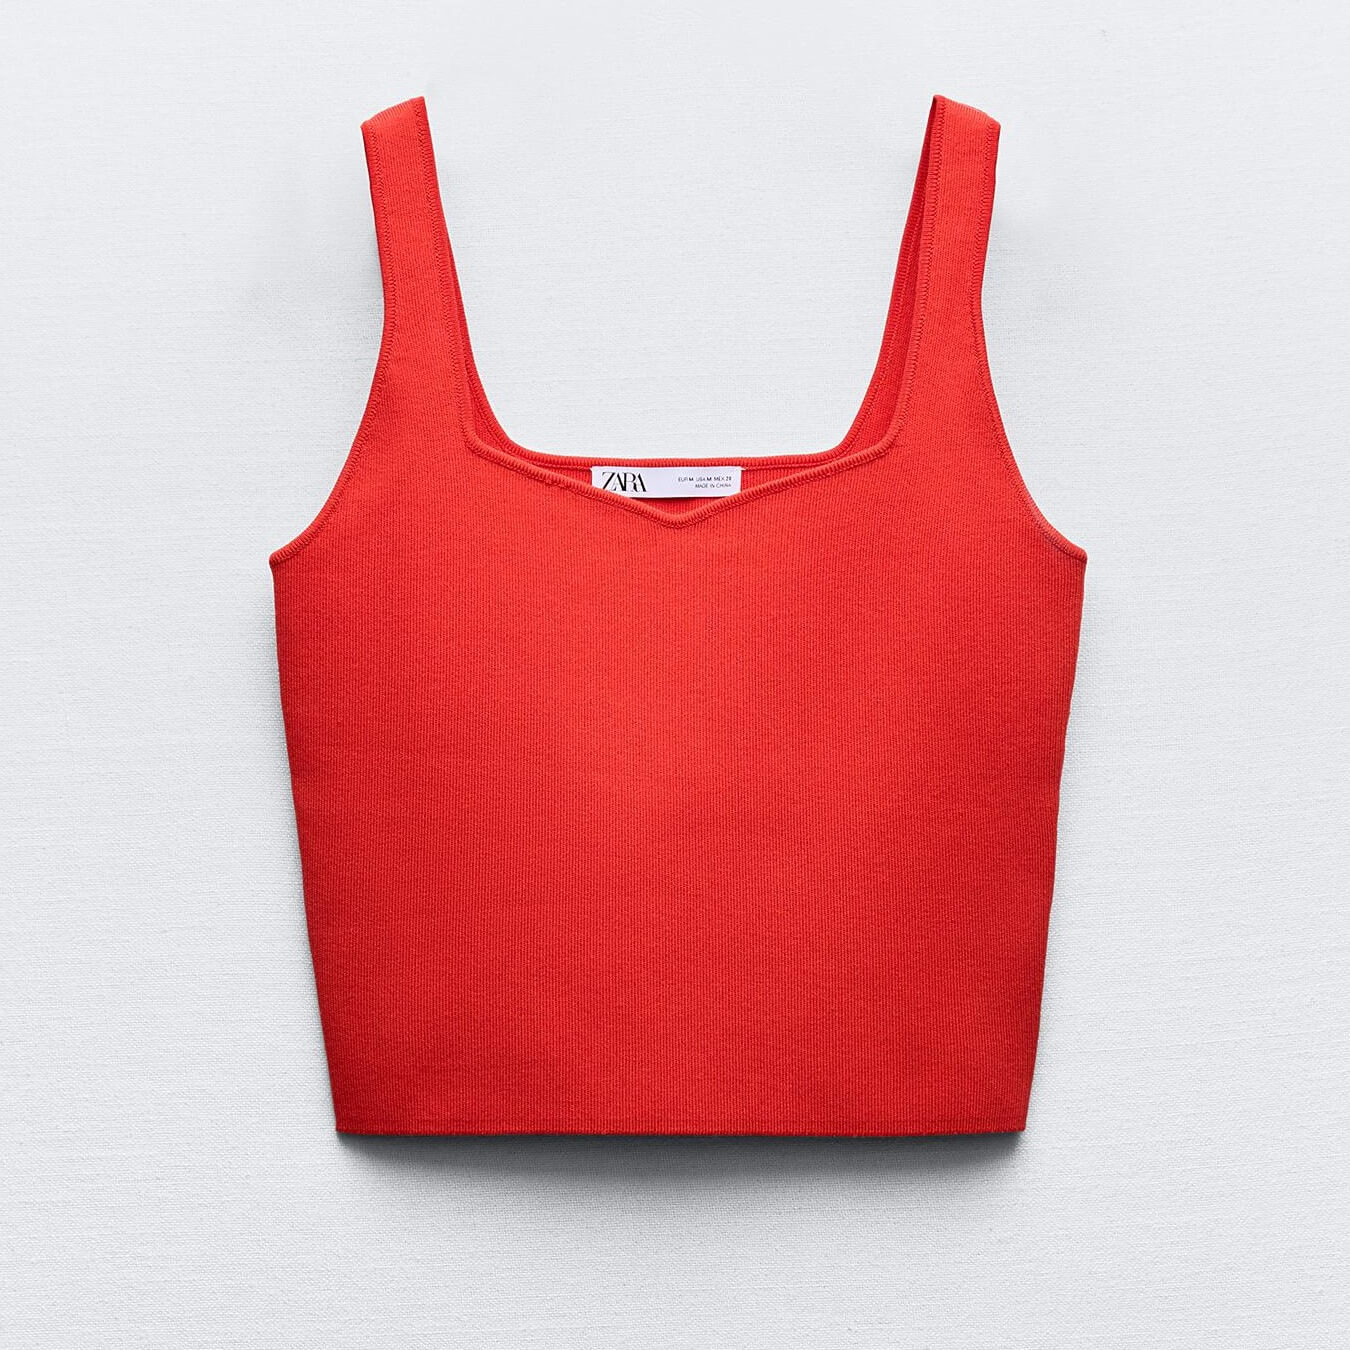 Кроп топ Zara Plain Knit, красный